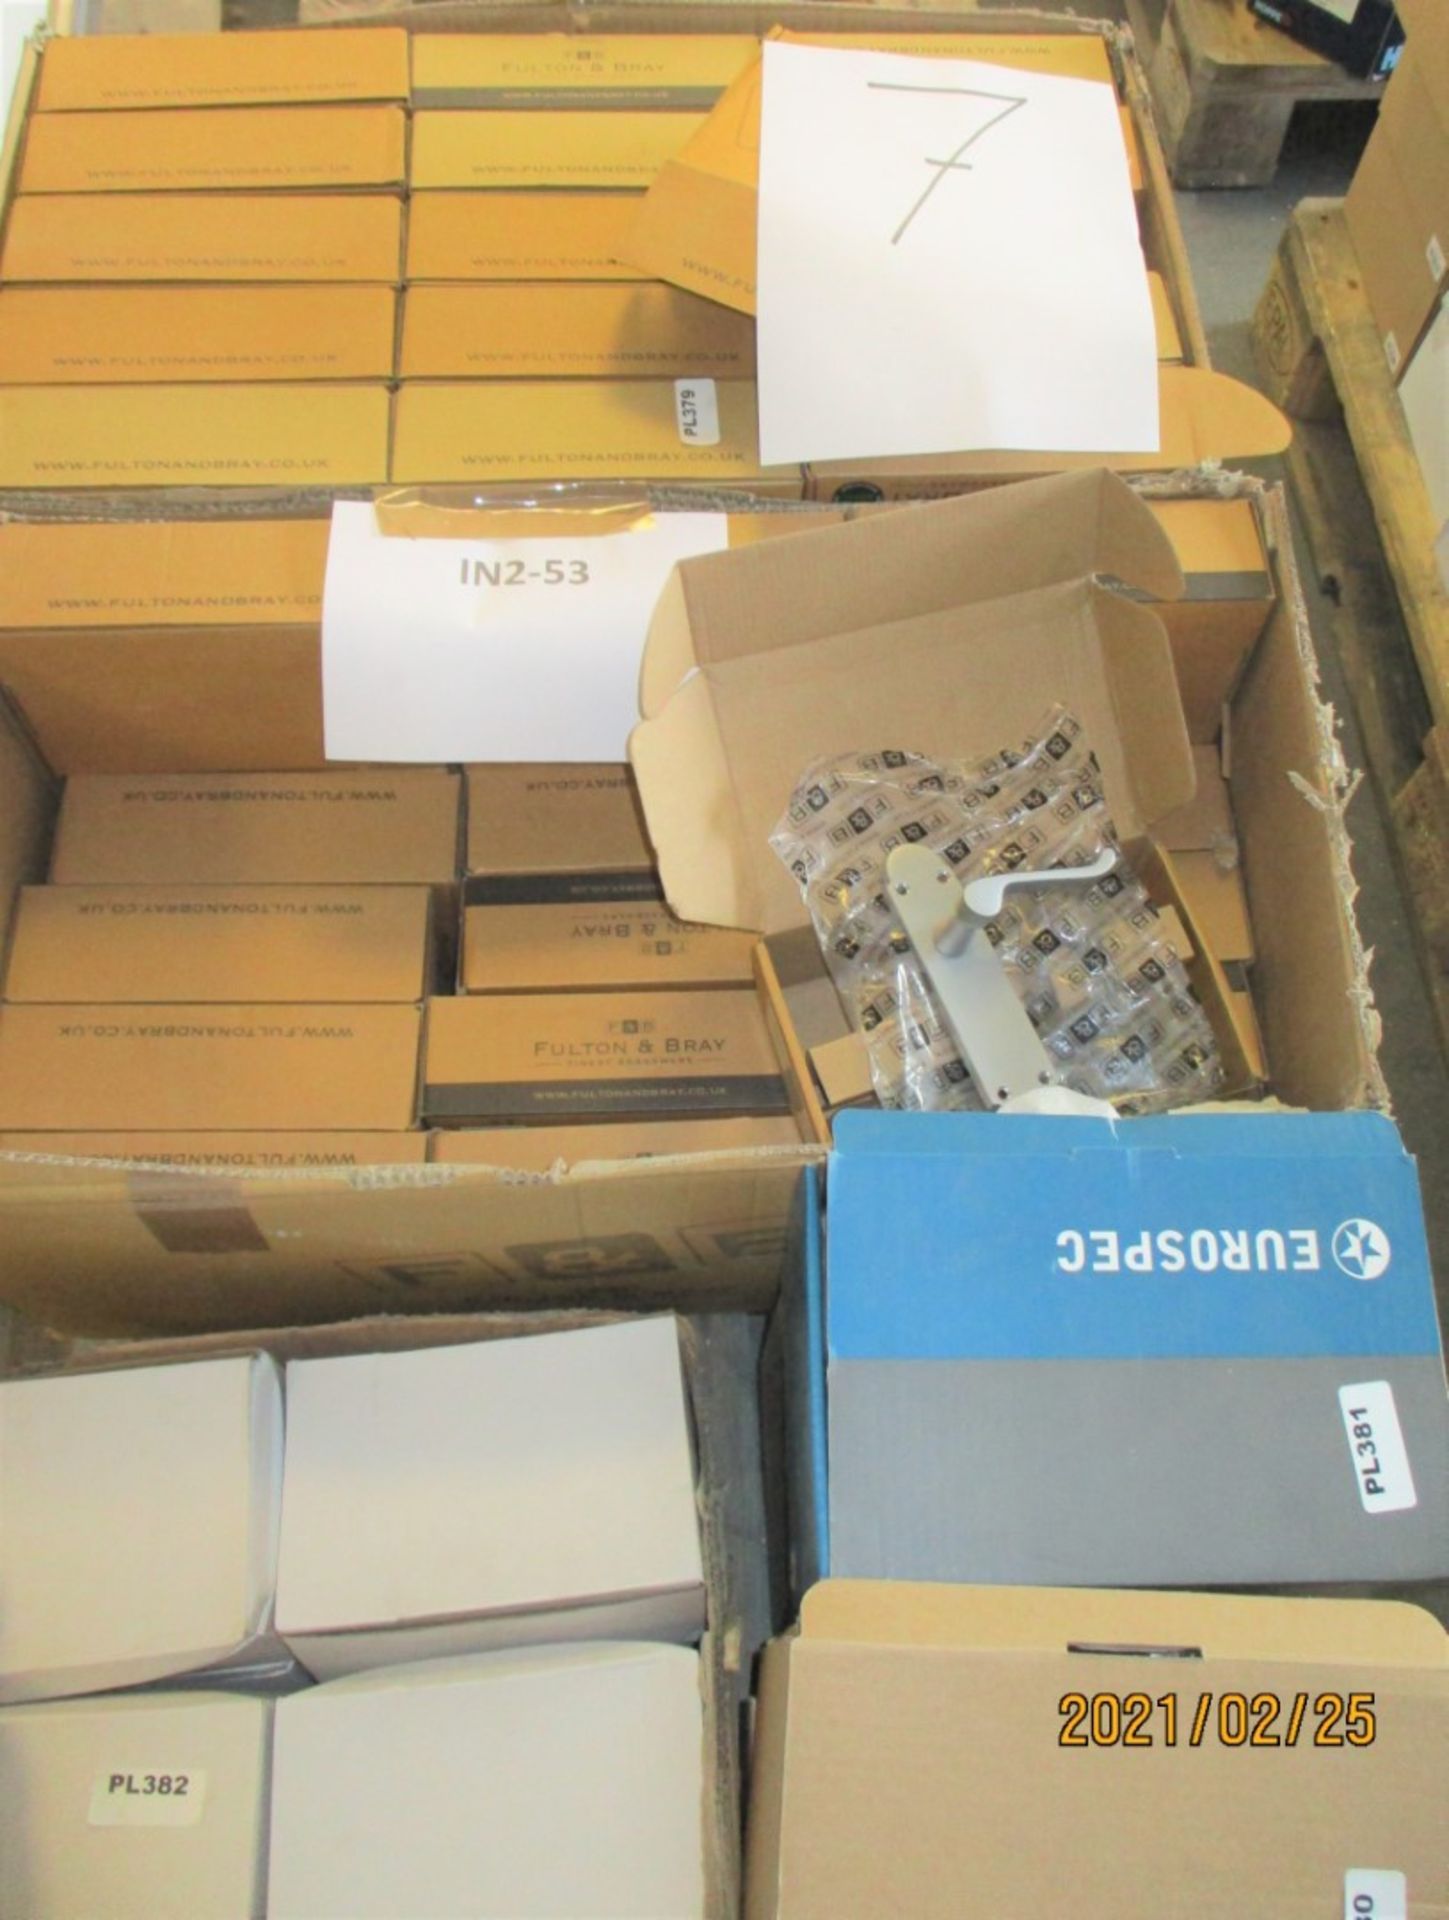 1 x Assorted Pallet Lot From Ironmongery Hardware Retailer - Unused Stock - CL538 - Ref: Pallet